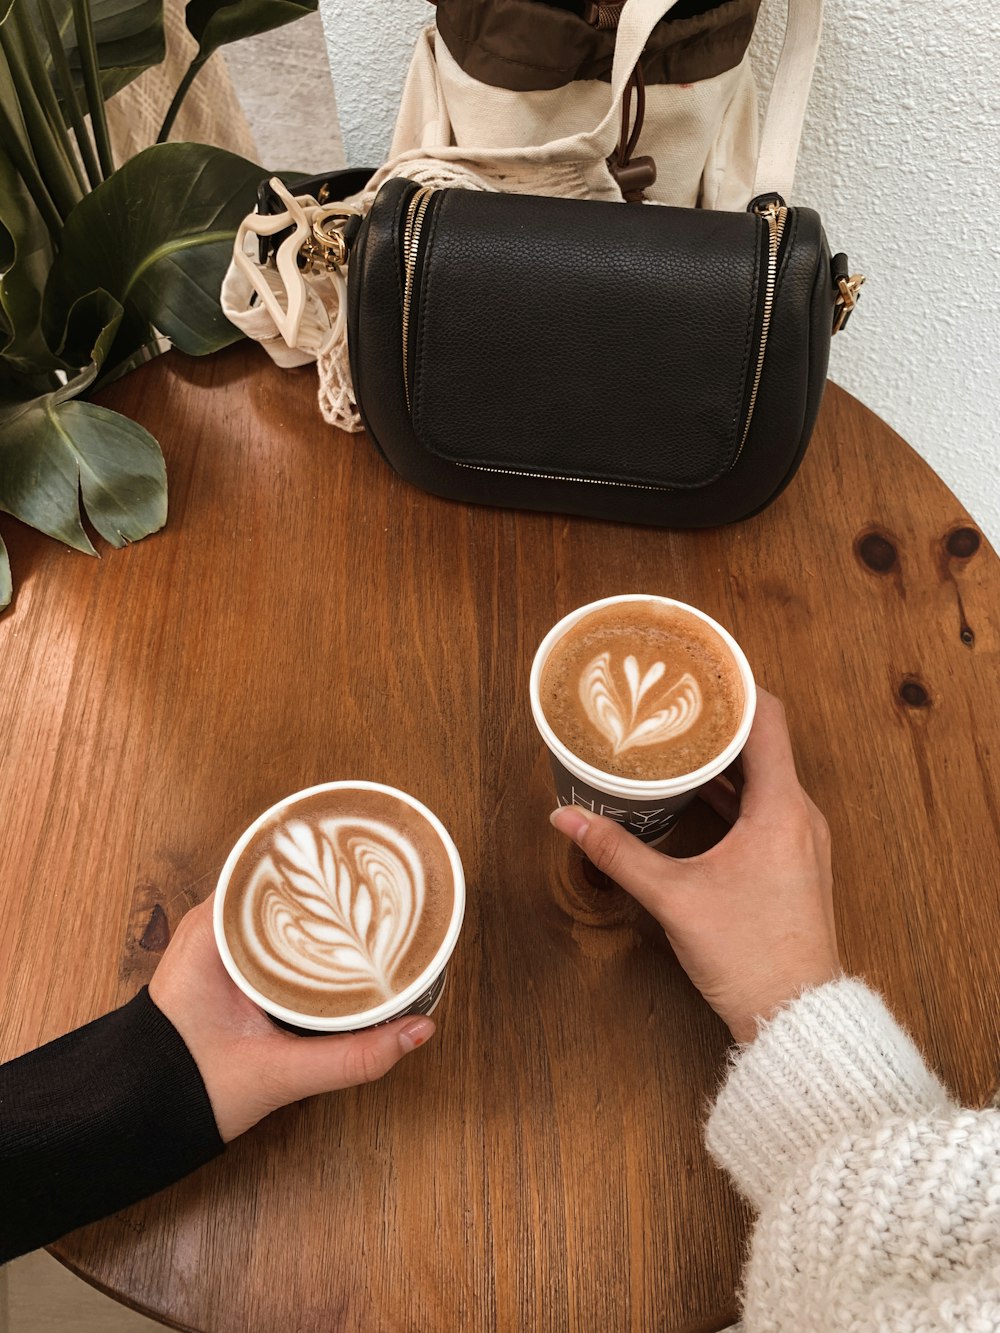 person holding white ceramic mug with cappuccino